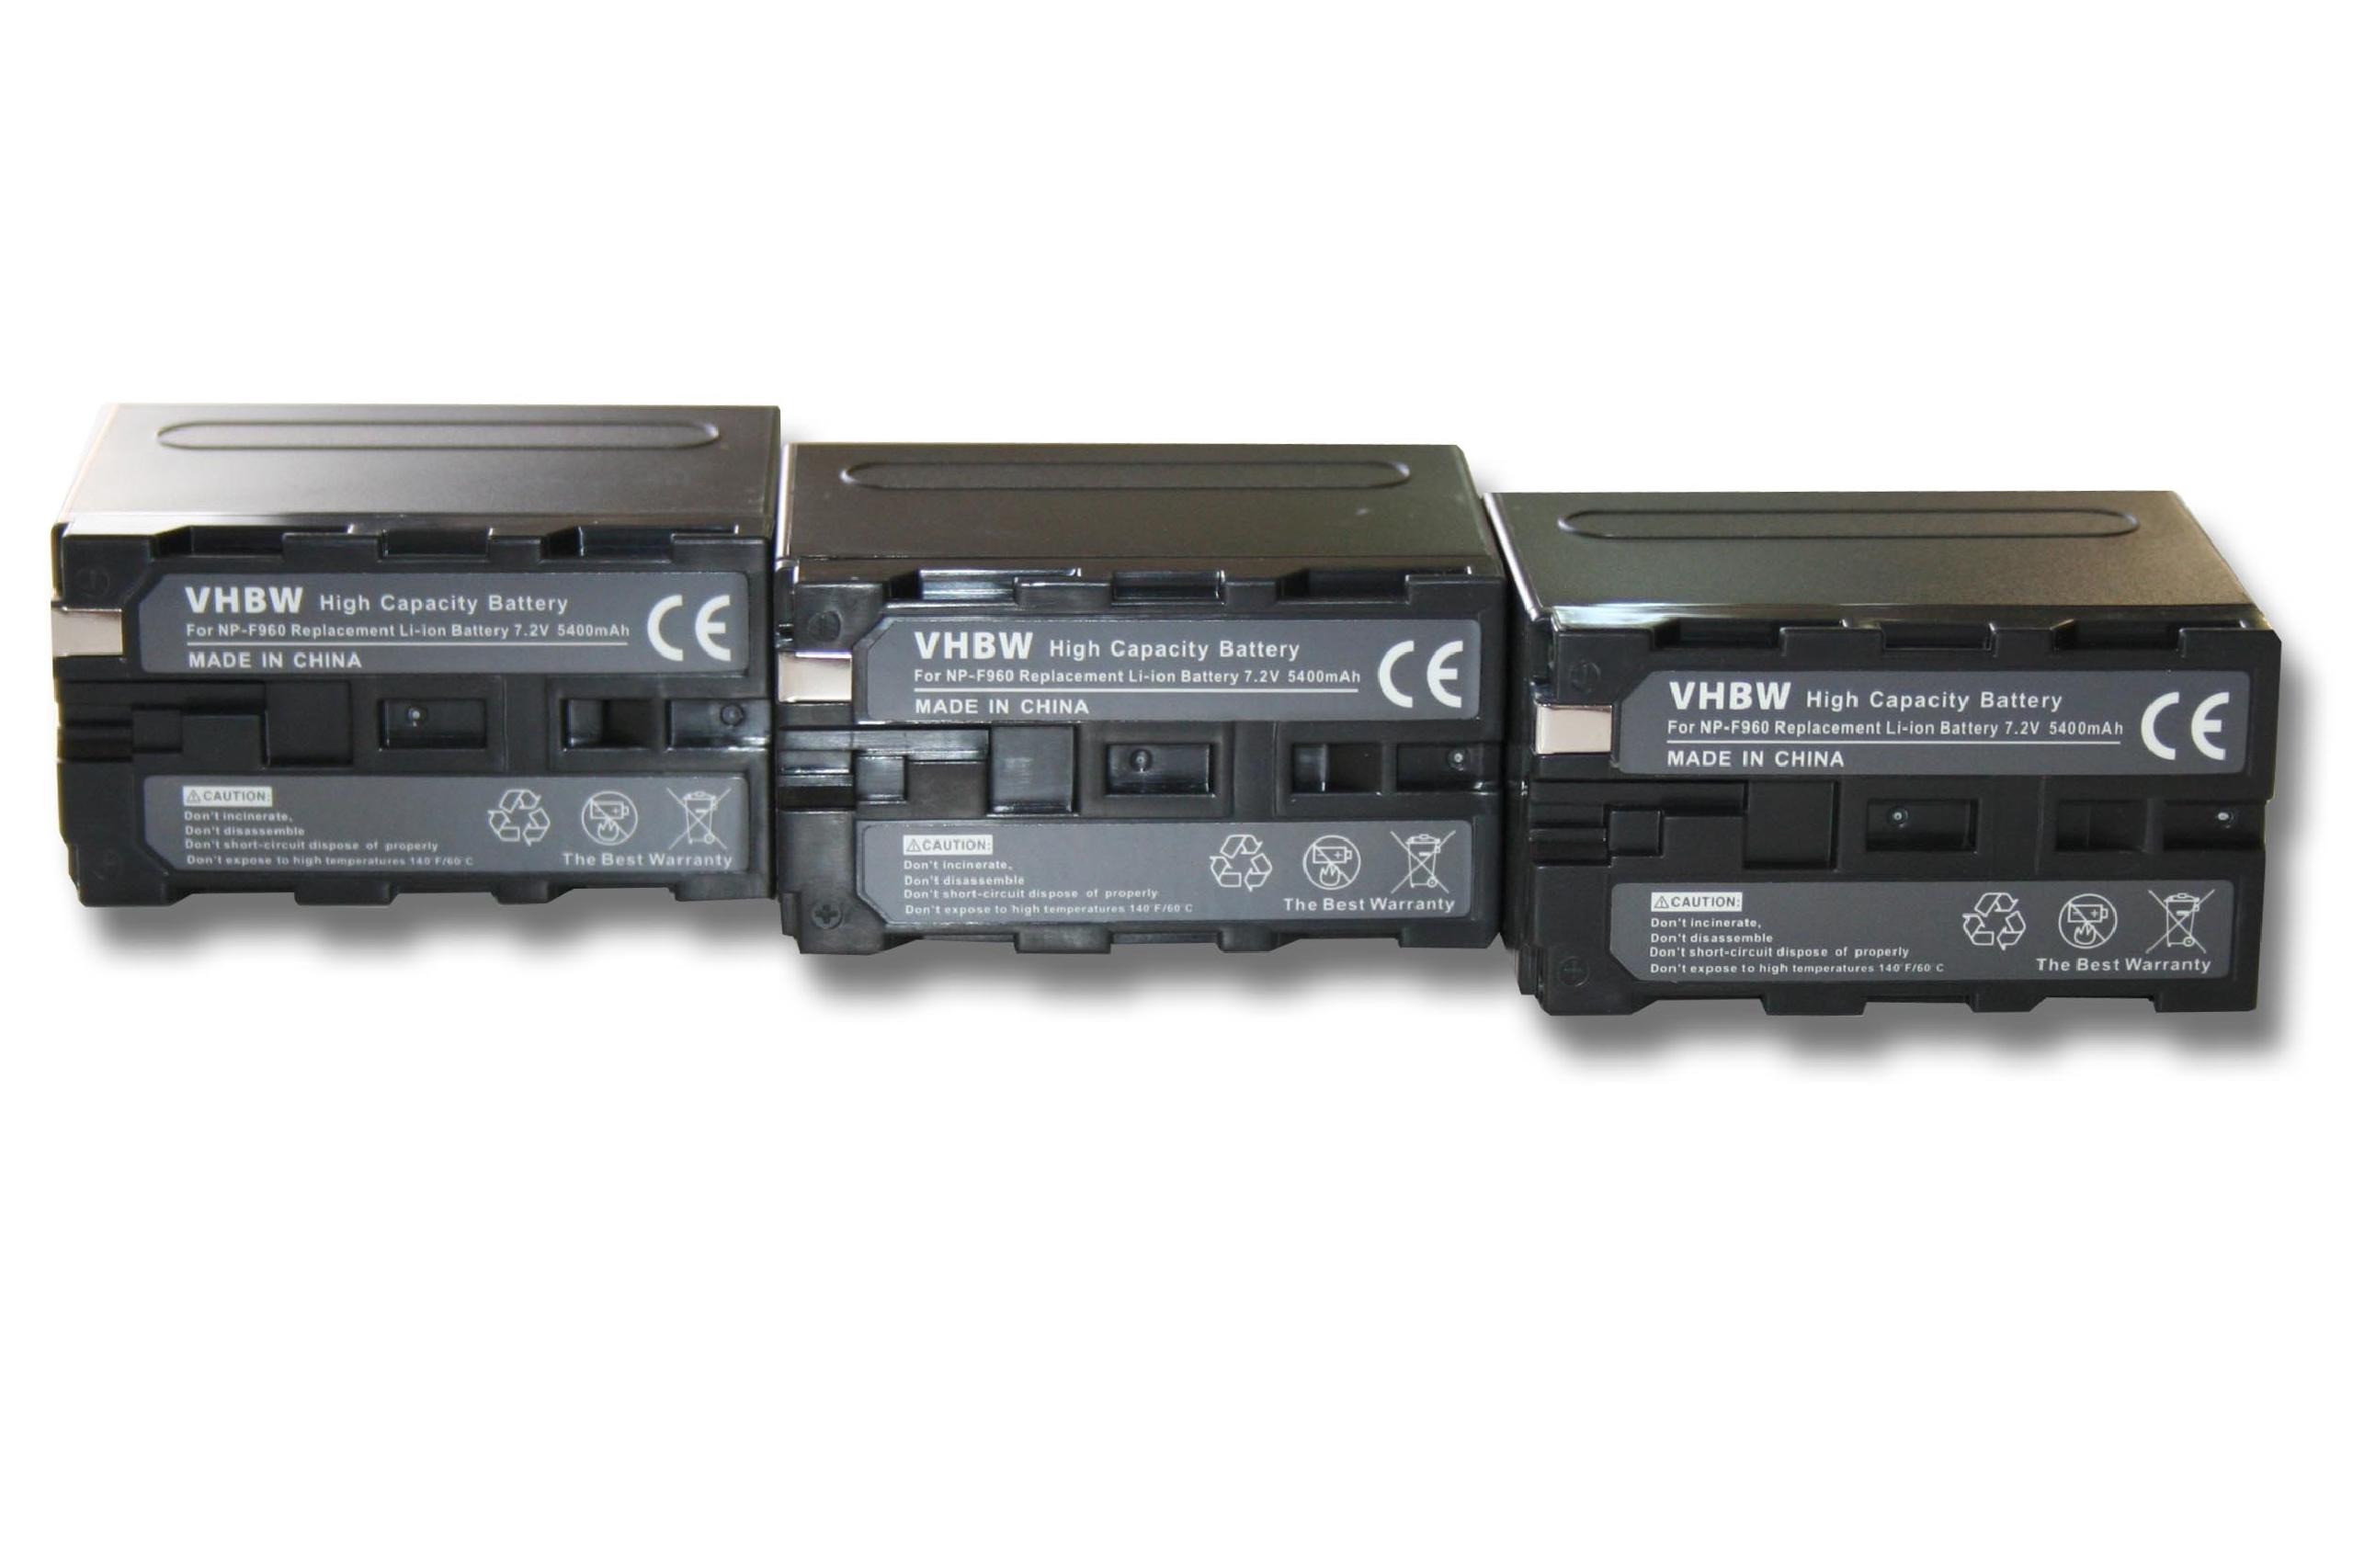 VHBW kompatibel mit HXR-NX5E, HVR-Z1E MVC-FD51, Volt, 7.2 MVC-FD200, Videokamera, Li-Ion MVC-FD7, 6000 Akku MVC-FD5, MVC-FD100, Sony 